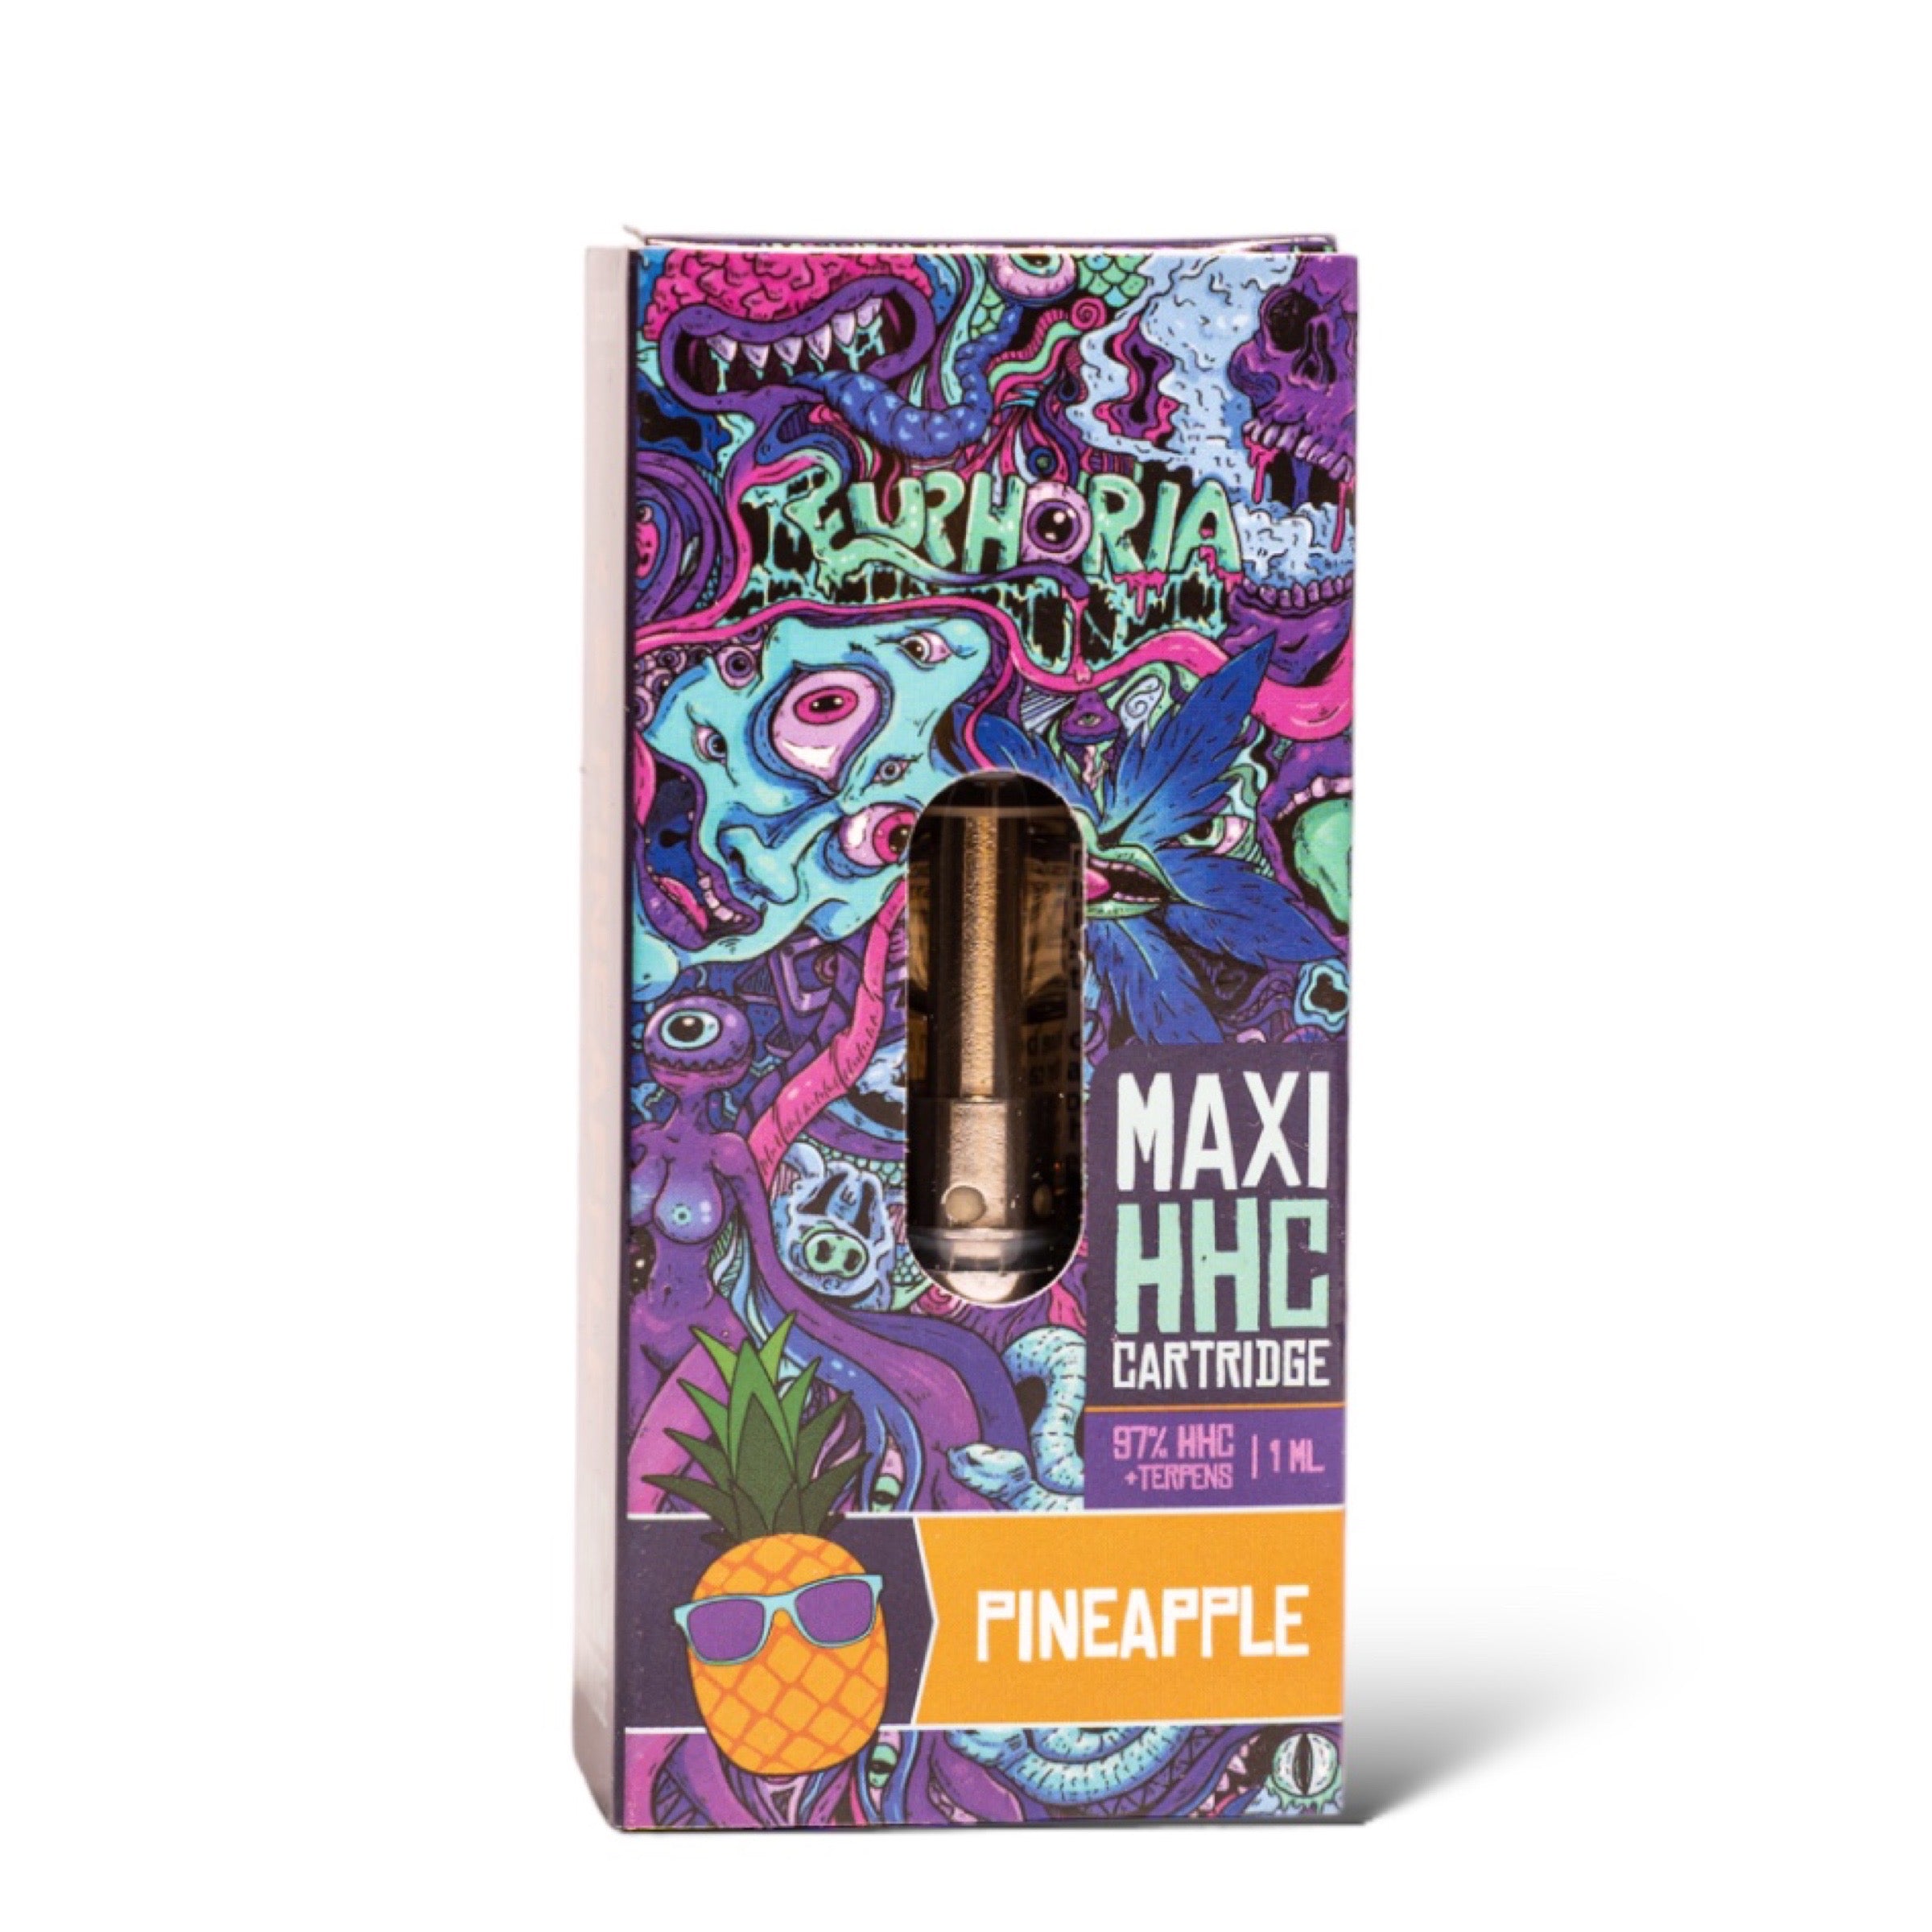 Euphoria Cartridge (Dab Pen) by Maxi HHC - PineApple - 97% HHC/1000MG - 1ML - 600 puffs